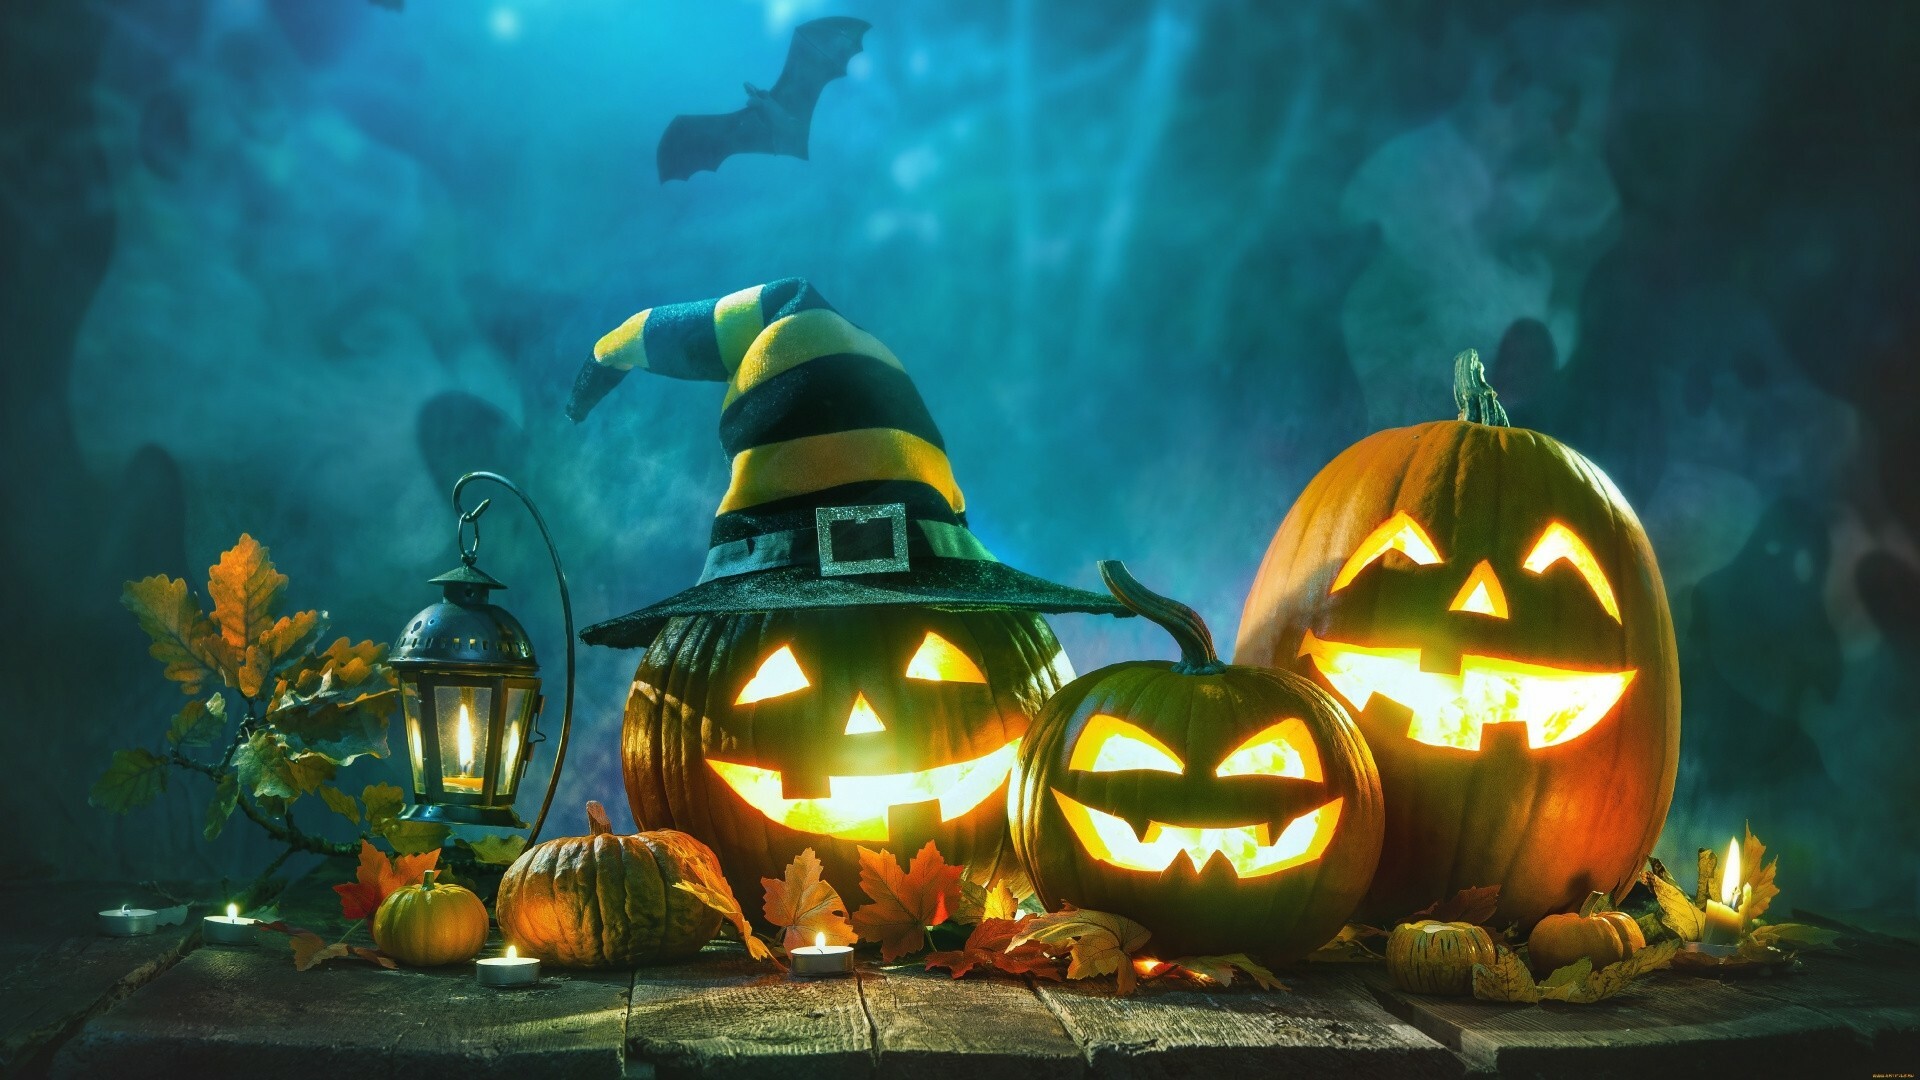 Ghoulish delights, Halloween night, Eerie ambiance, Trick or treat fun, 1920x1080 Full HD Desktop